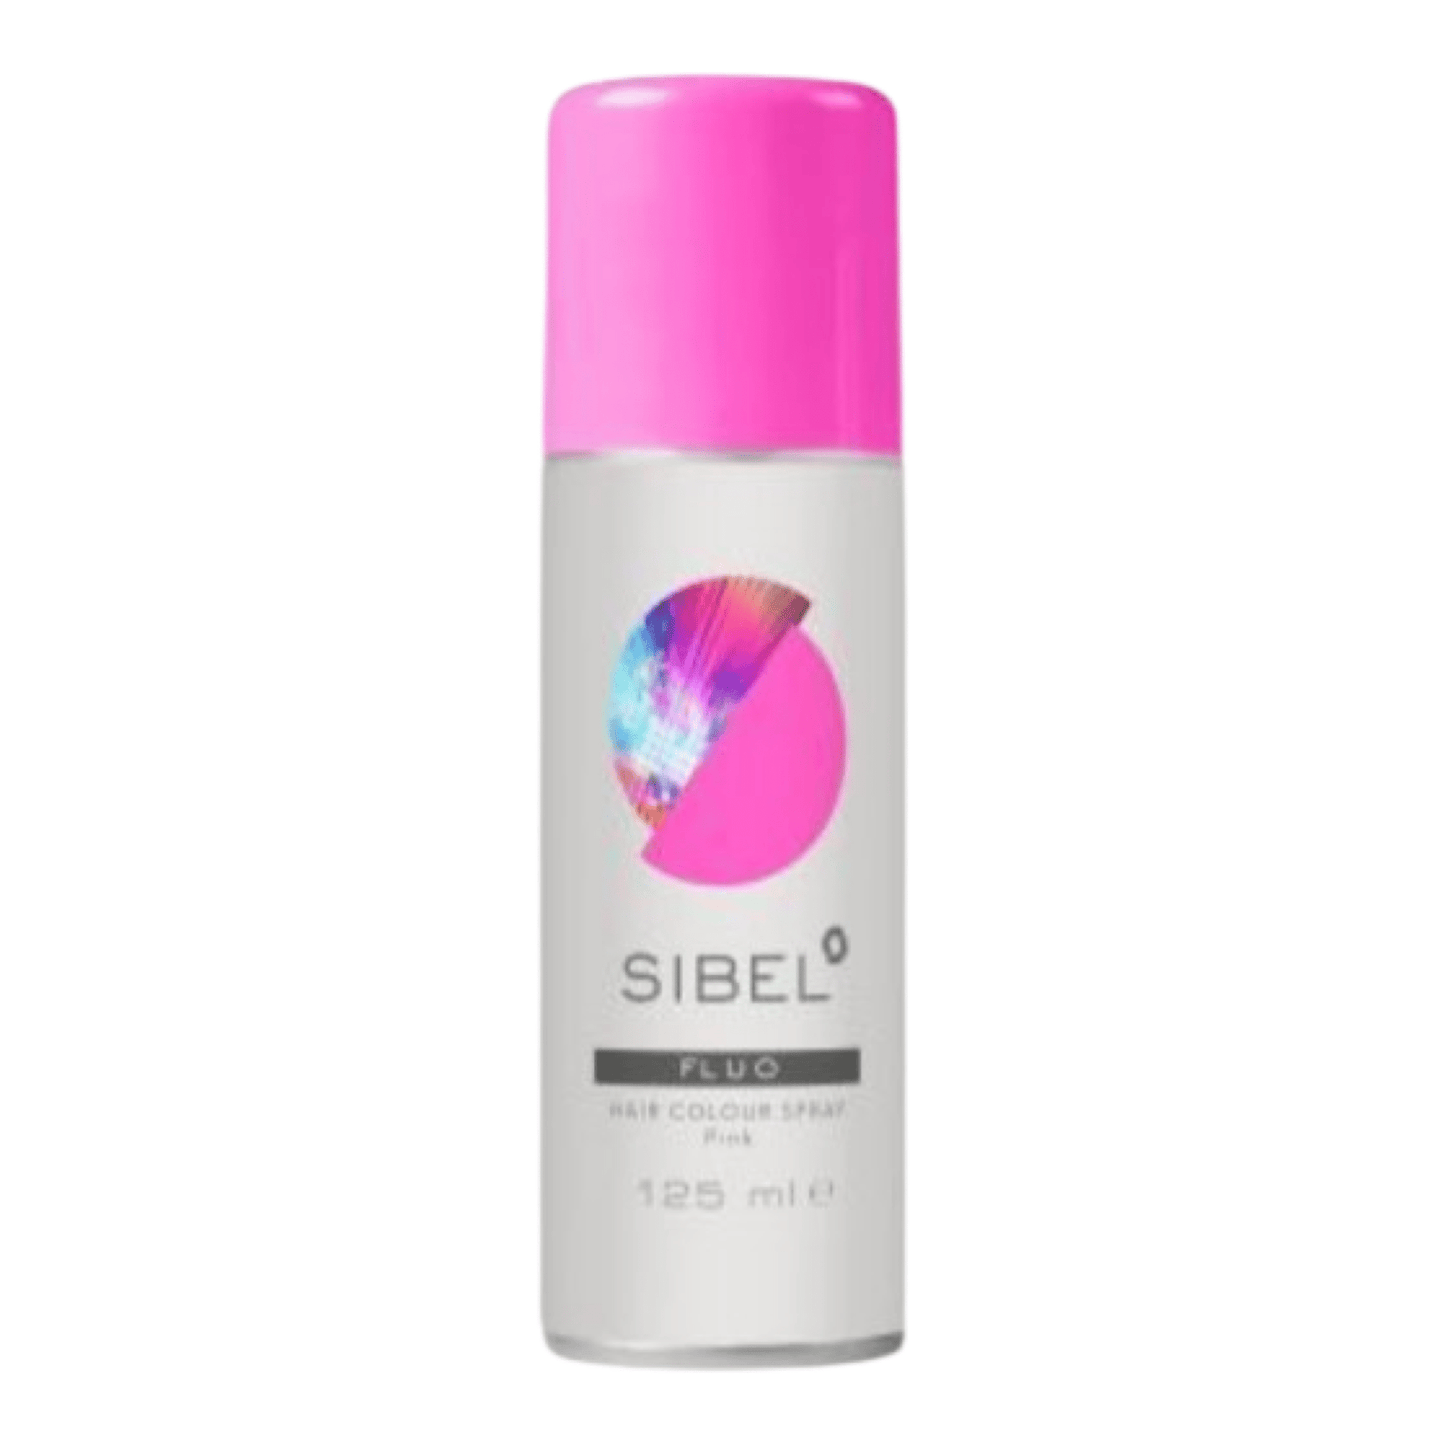 Sibel - color spray pink 125 ml - Merle og Wilde